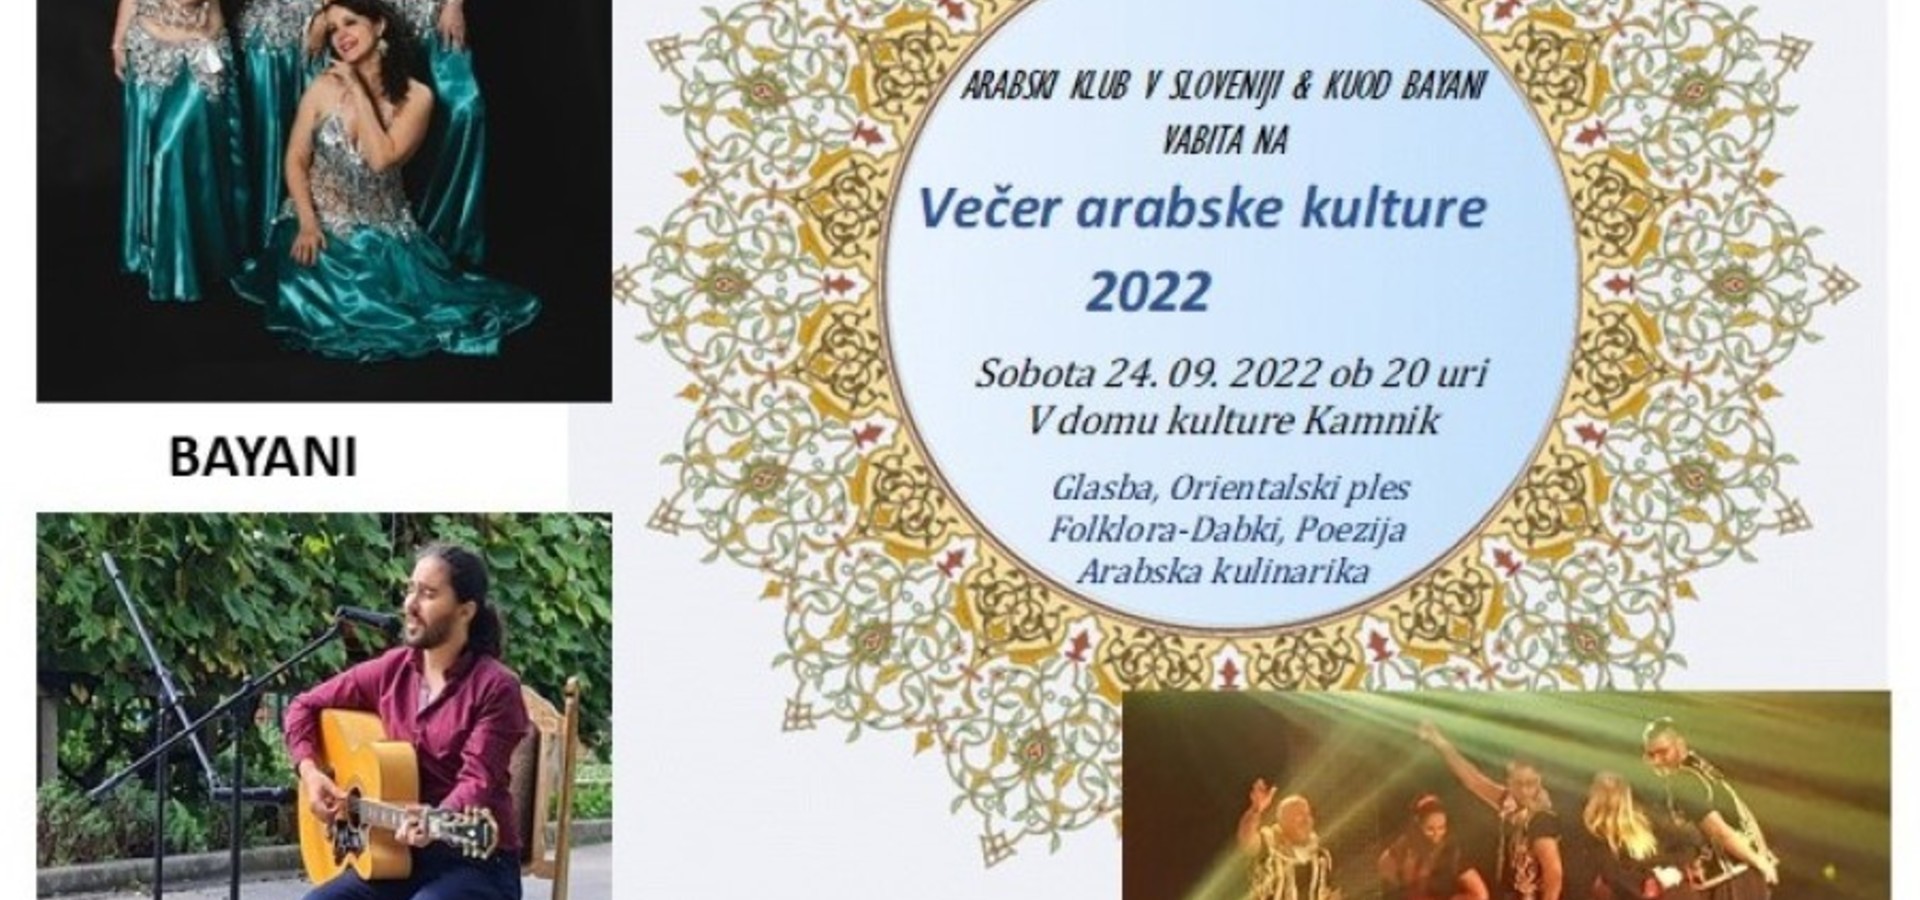 Večer arabske kulture 2022